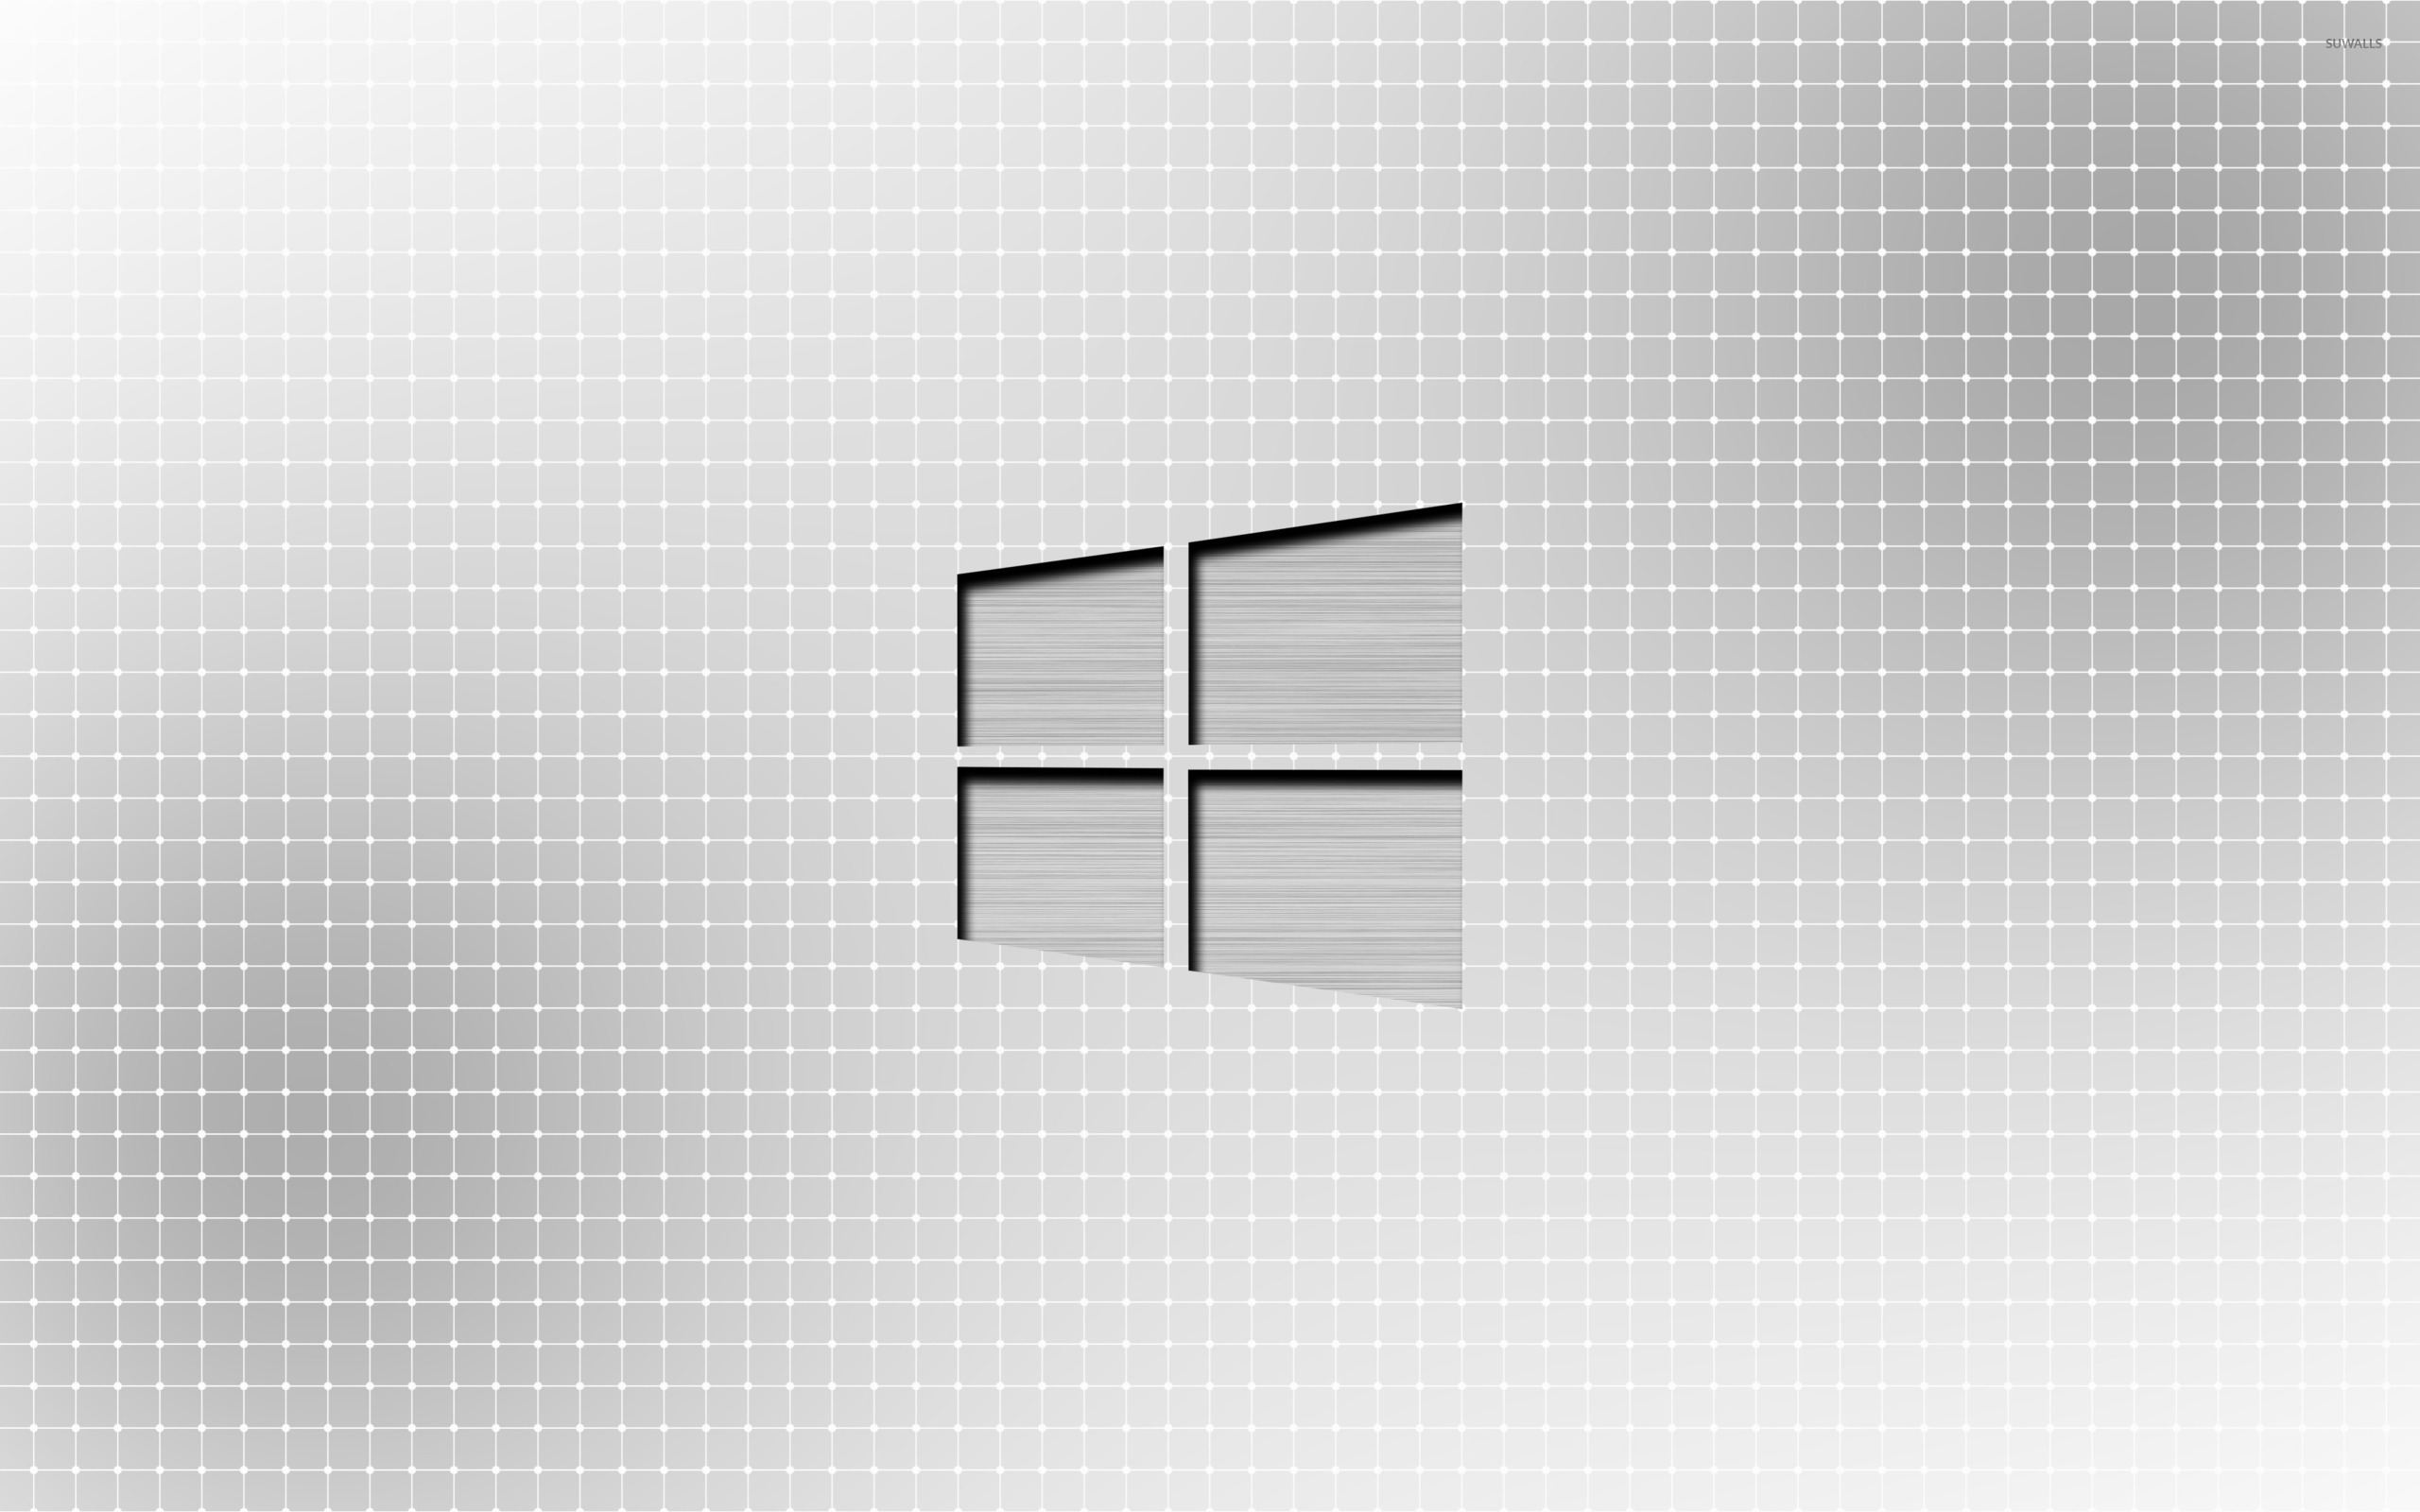 xp windows grid view